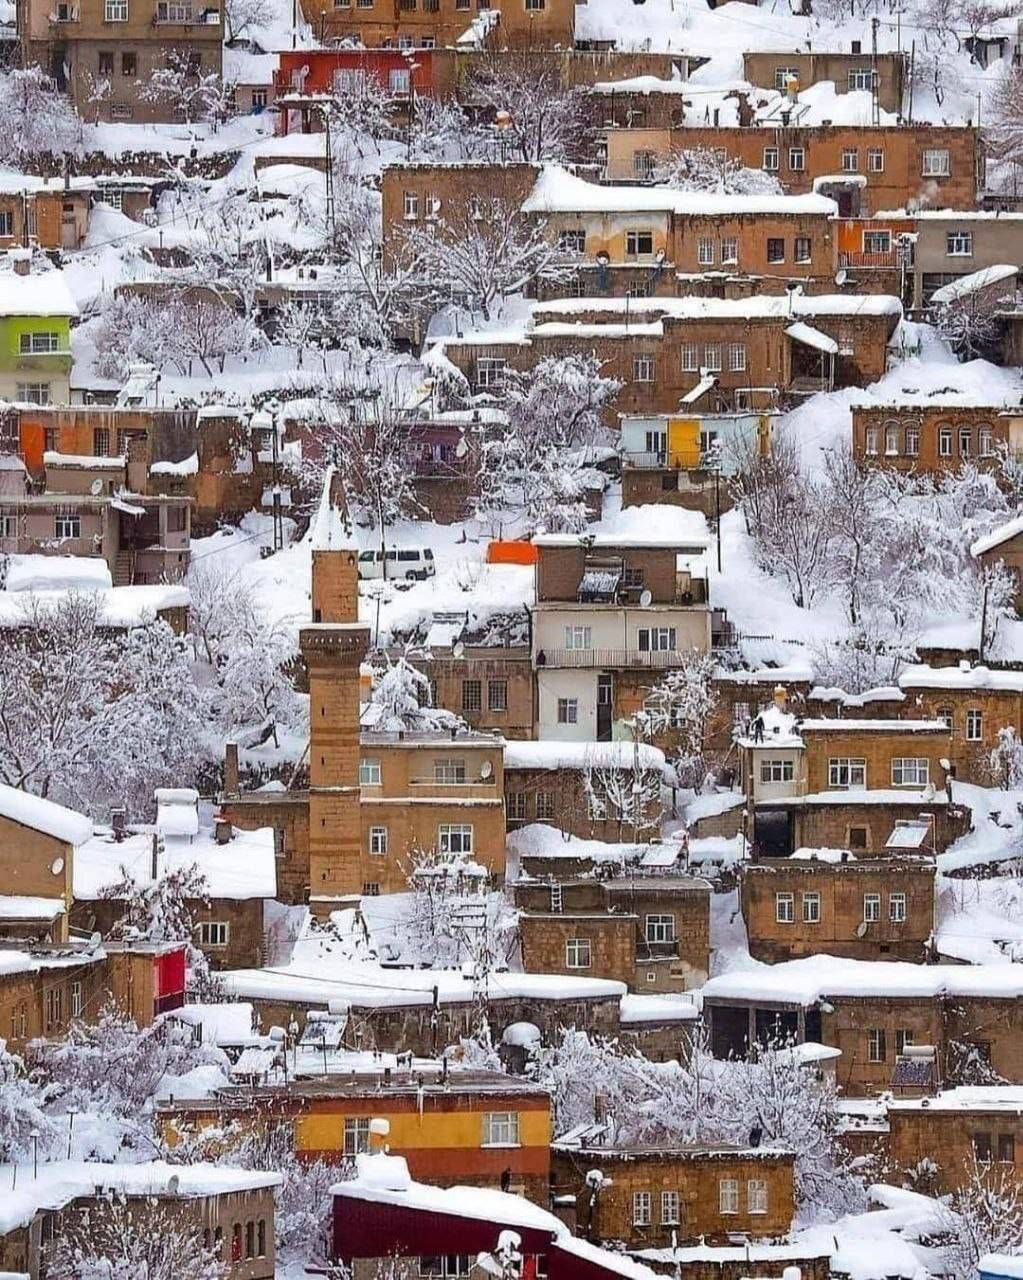 Rural area in Iran’s Kordestan Province covered in snow